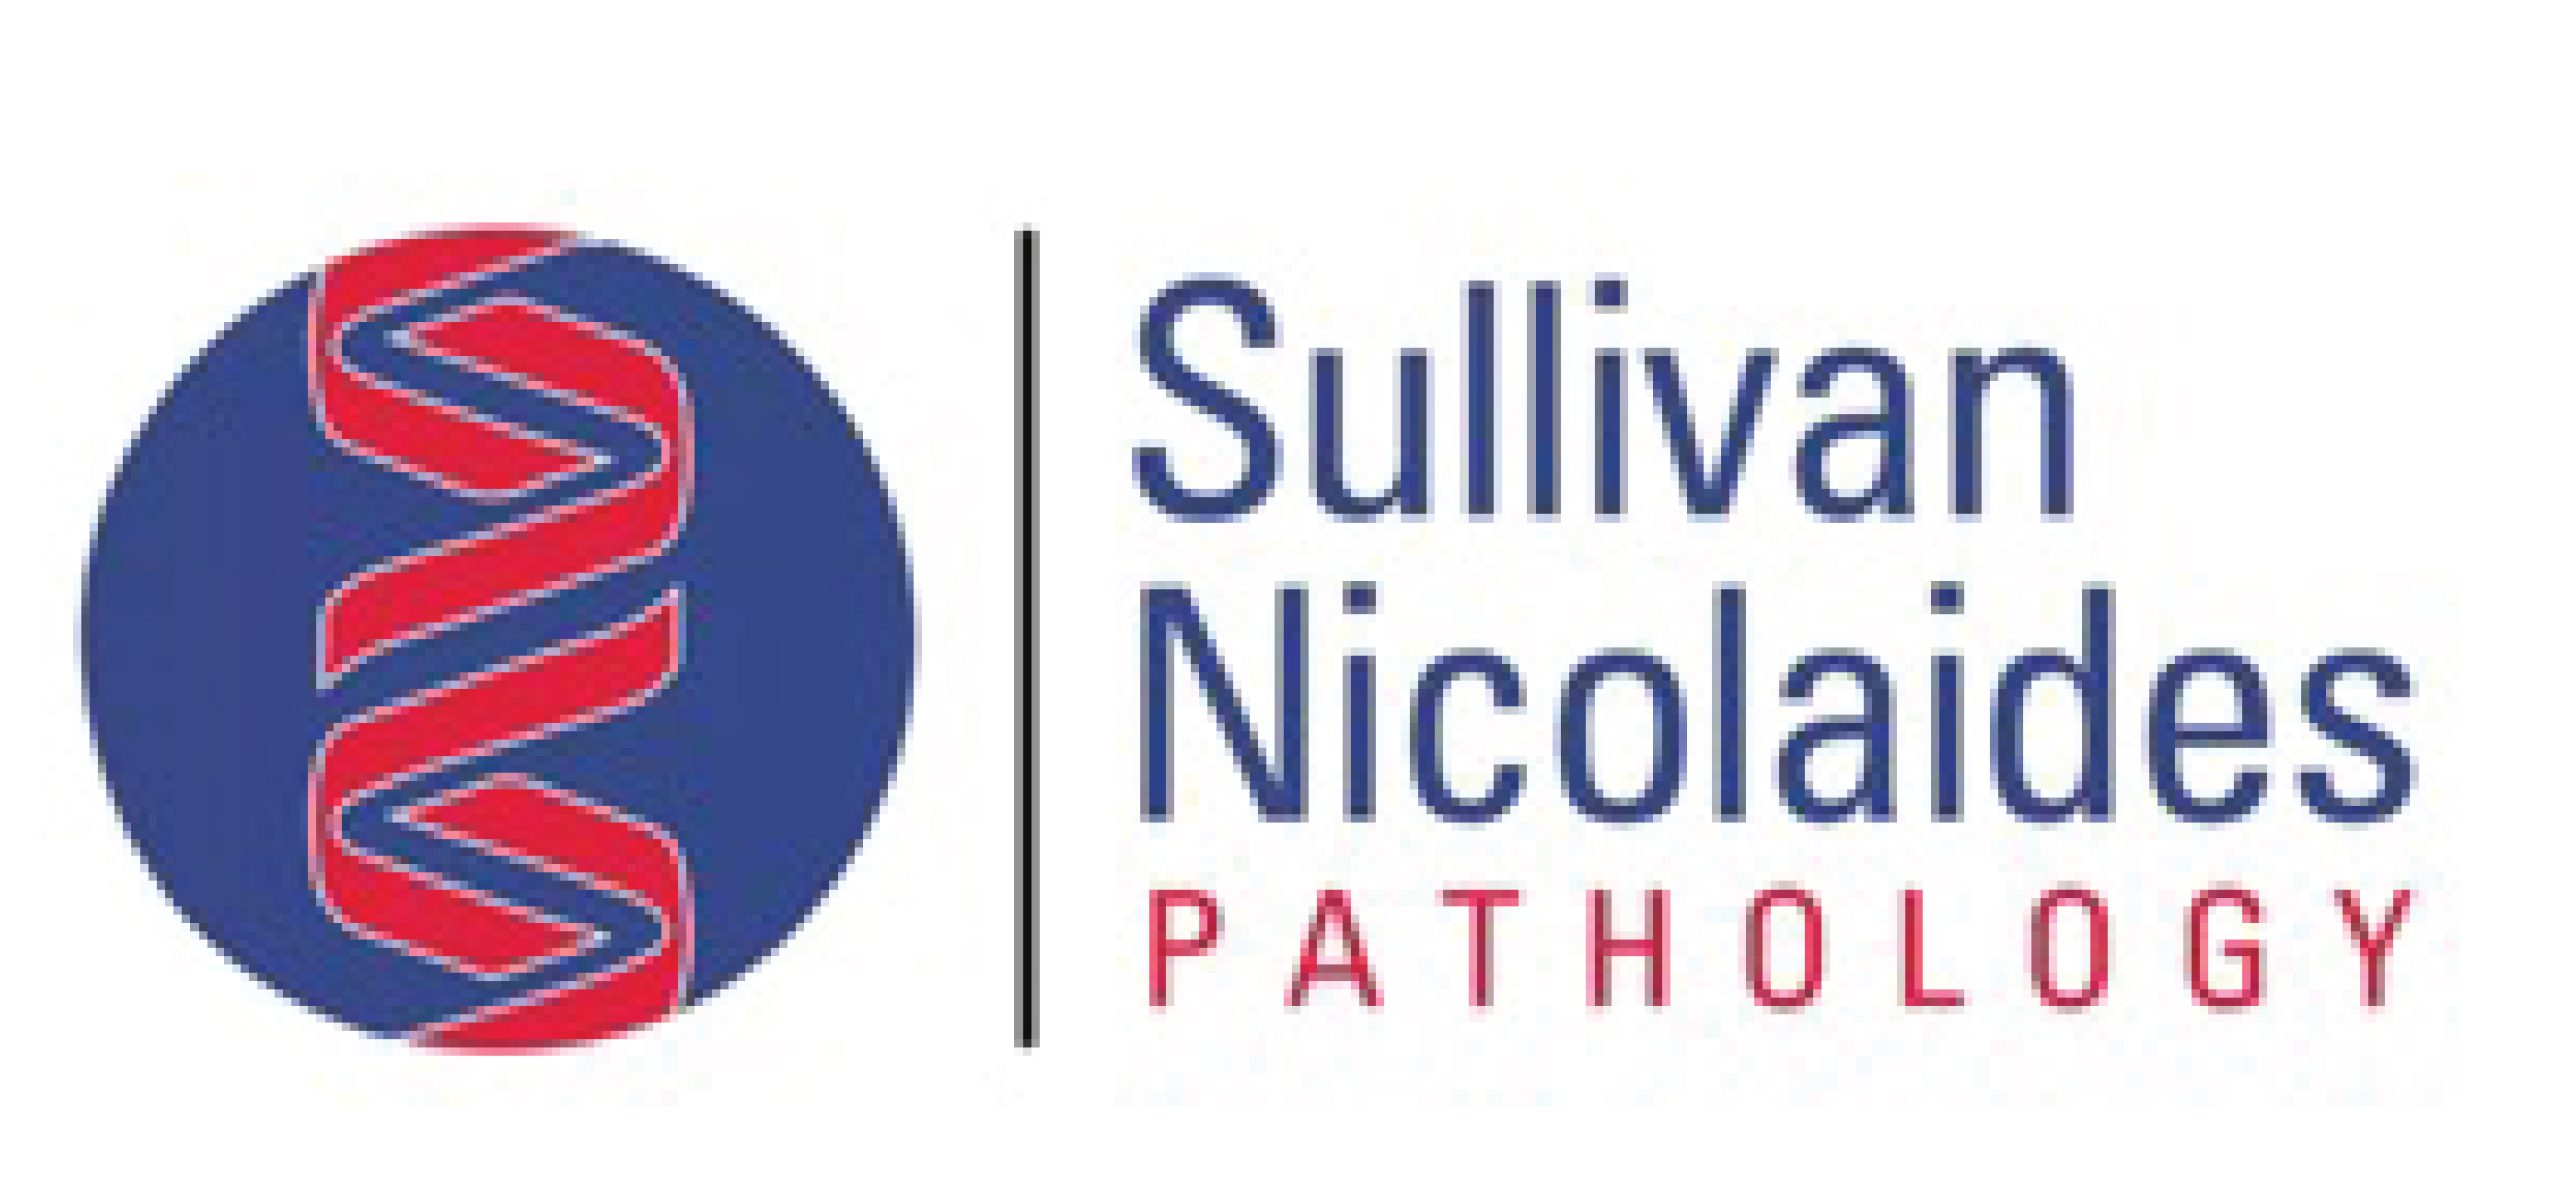 Sullivan Nicolaides Pathology